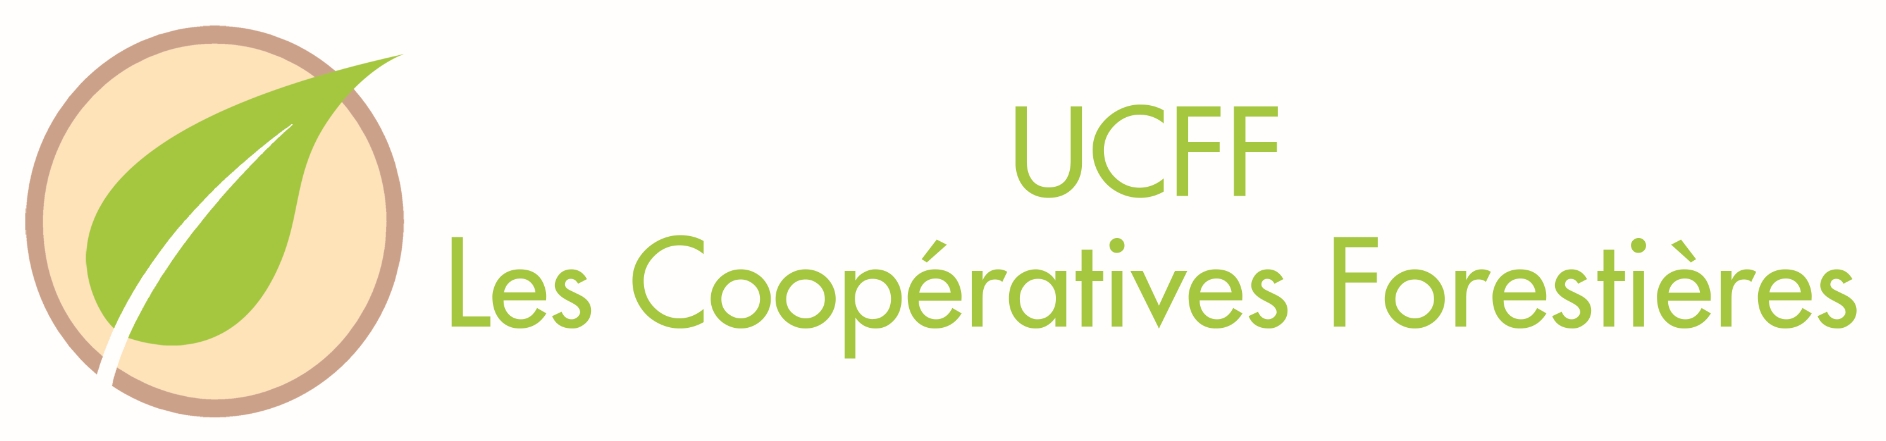 Logo UCFF-Les Cooperatives Forestieres.jpg - Galerie de photos